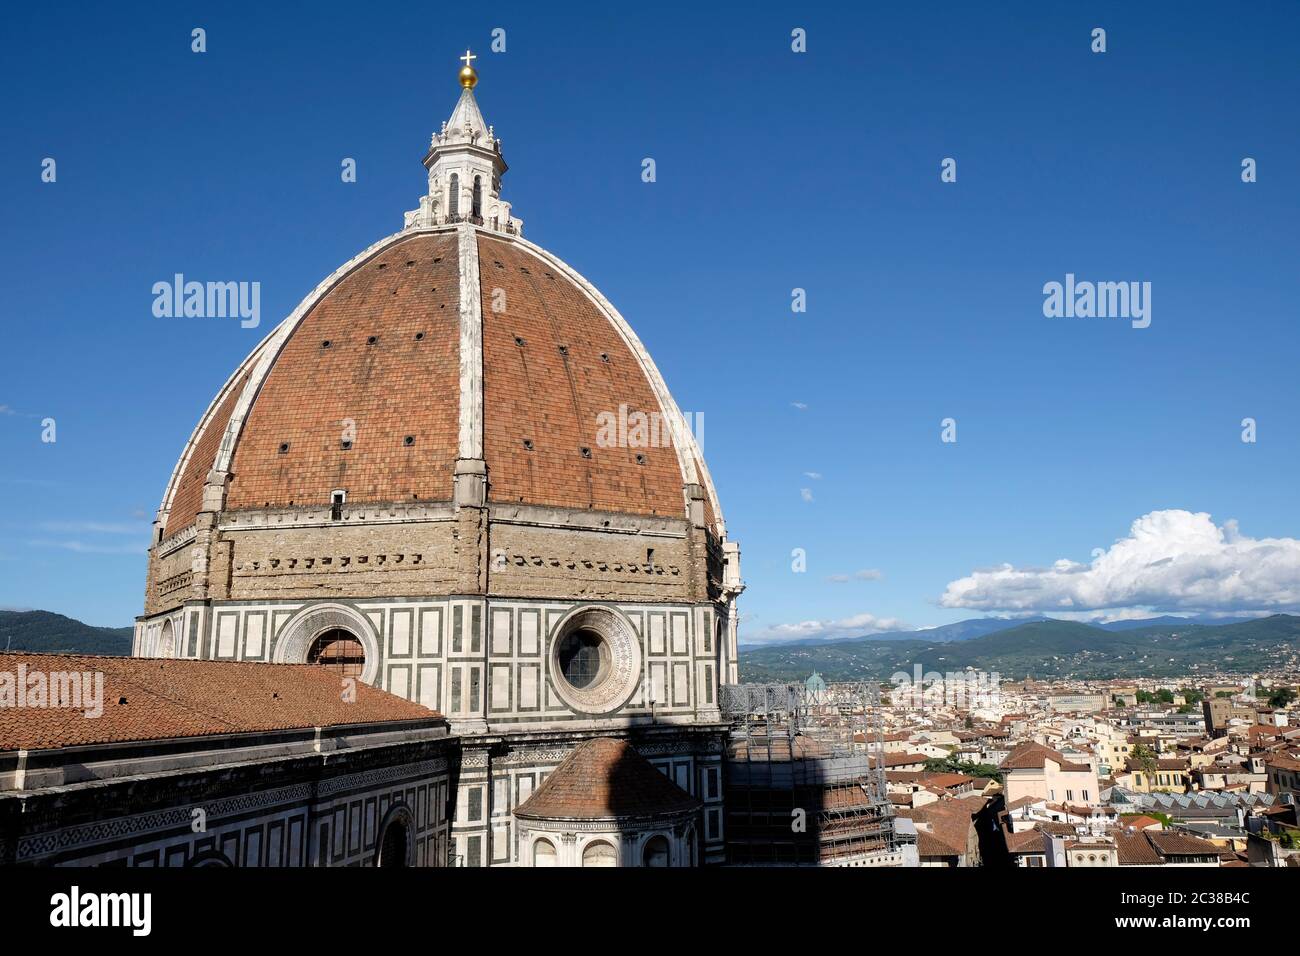 Duomo di Firenze, o Catedral de Santa Maria del Fiore, vista desde el Campanile de Giotto. Foto de stock